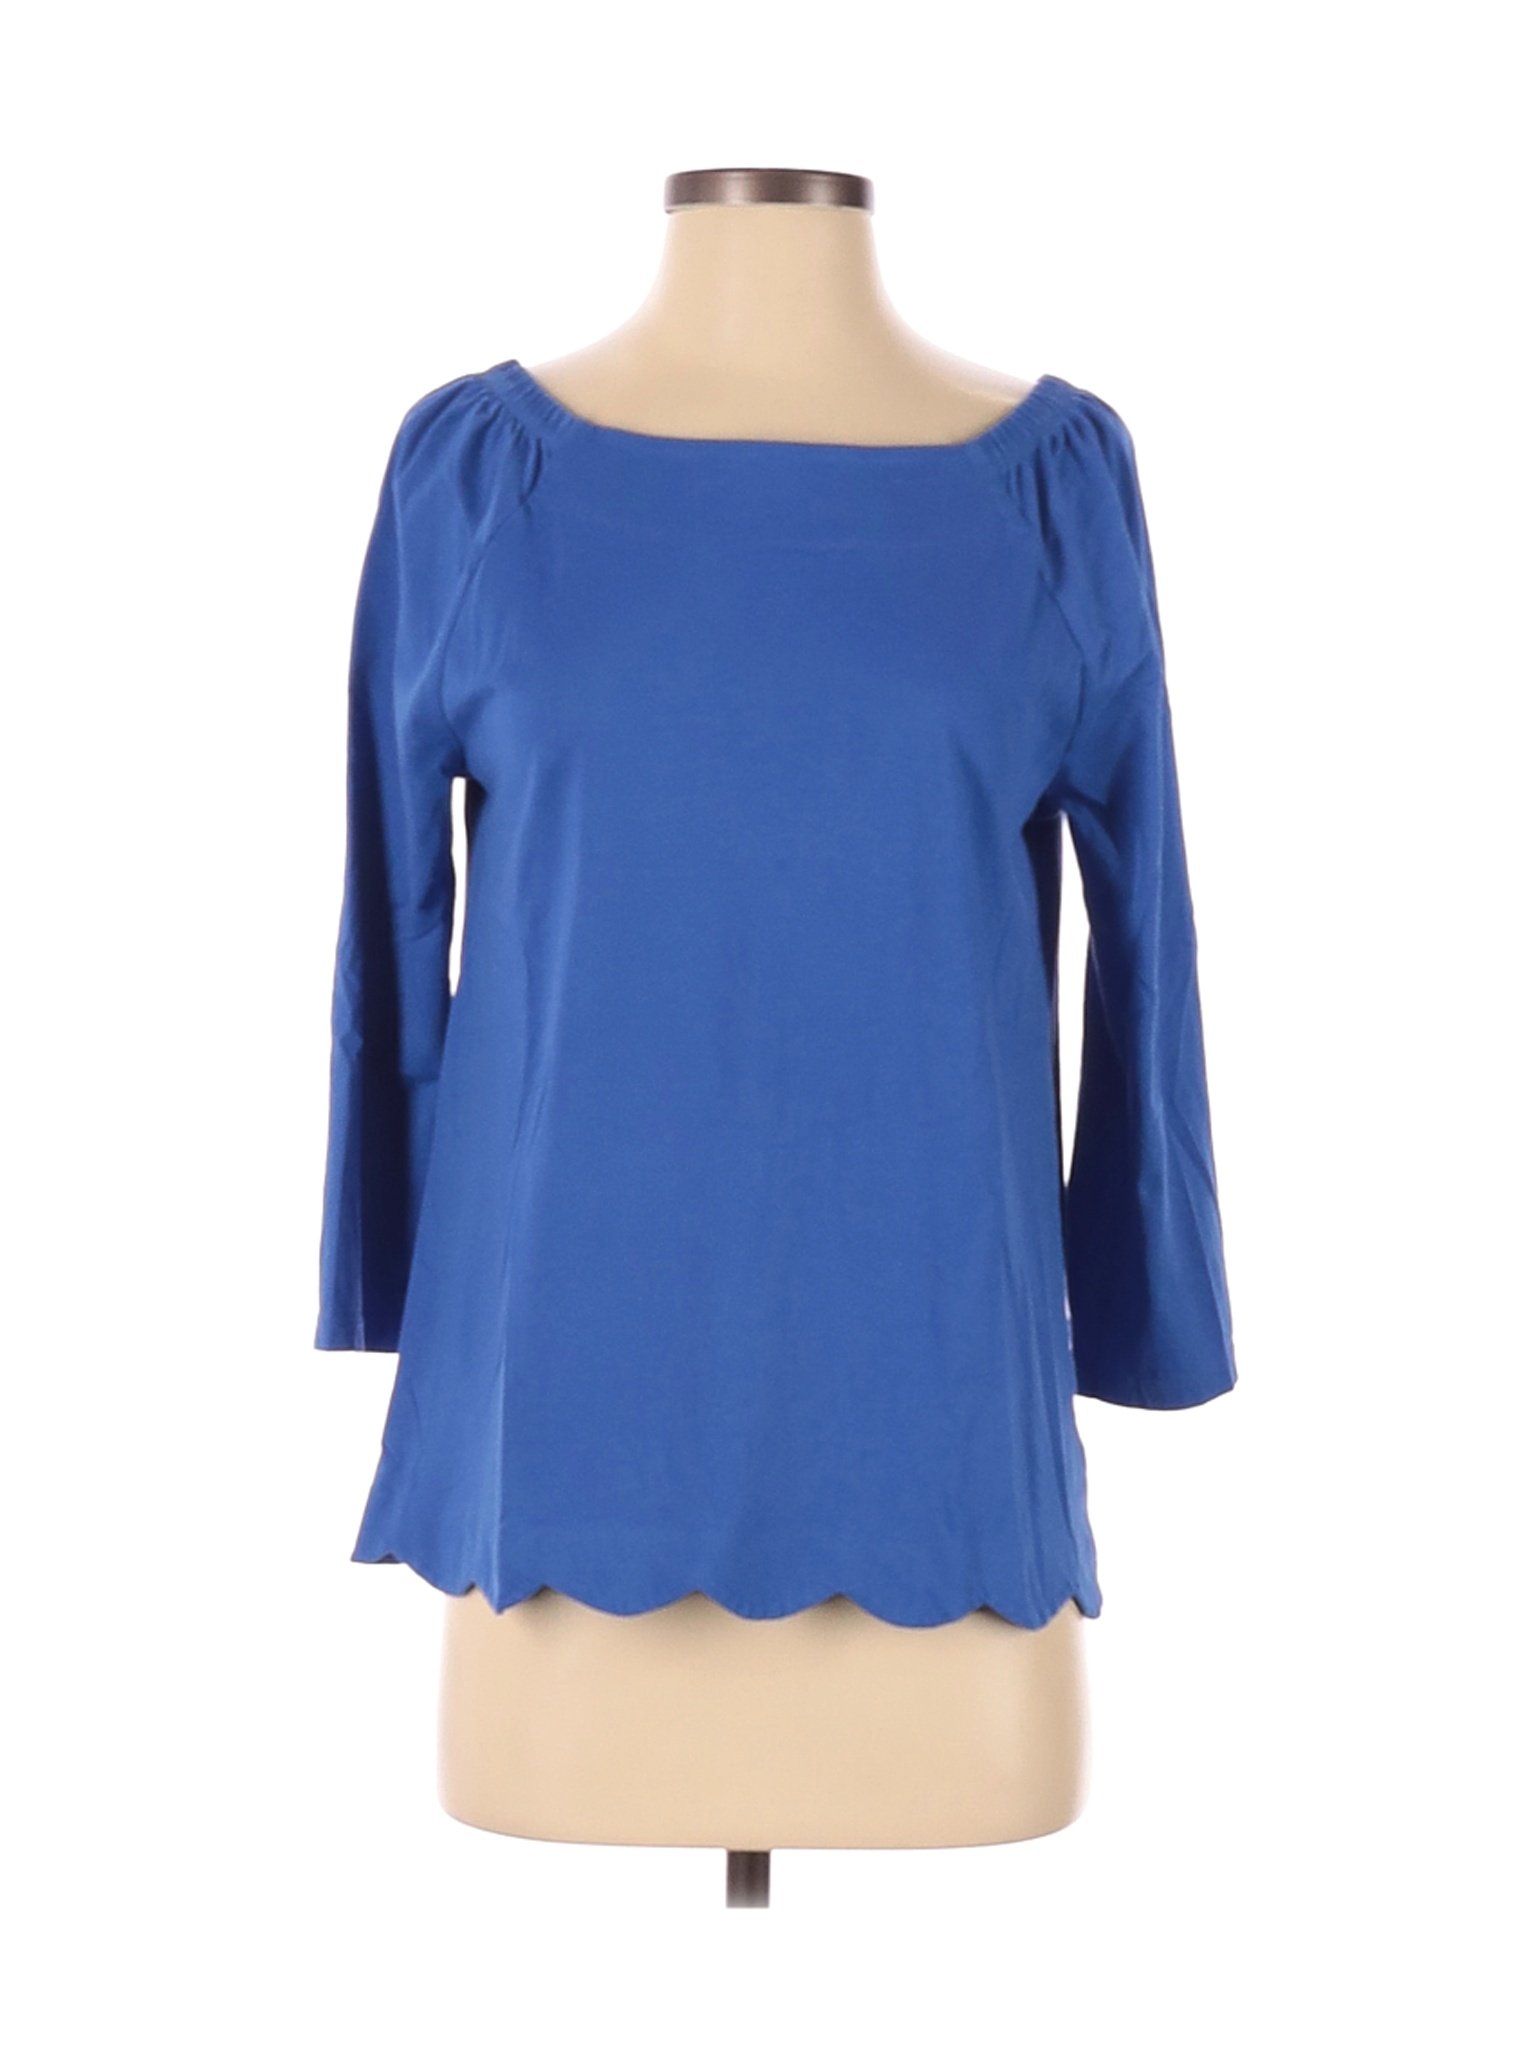 Talbots Women Blue 3/4 Sleeve T-Shirt S | eBay